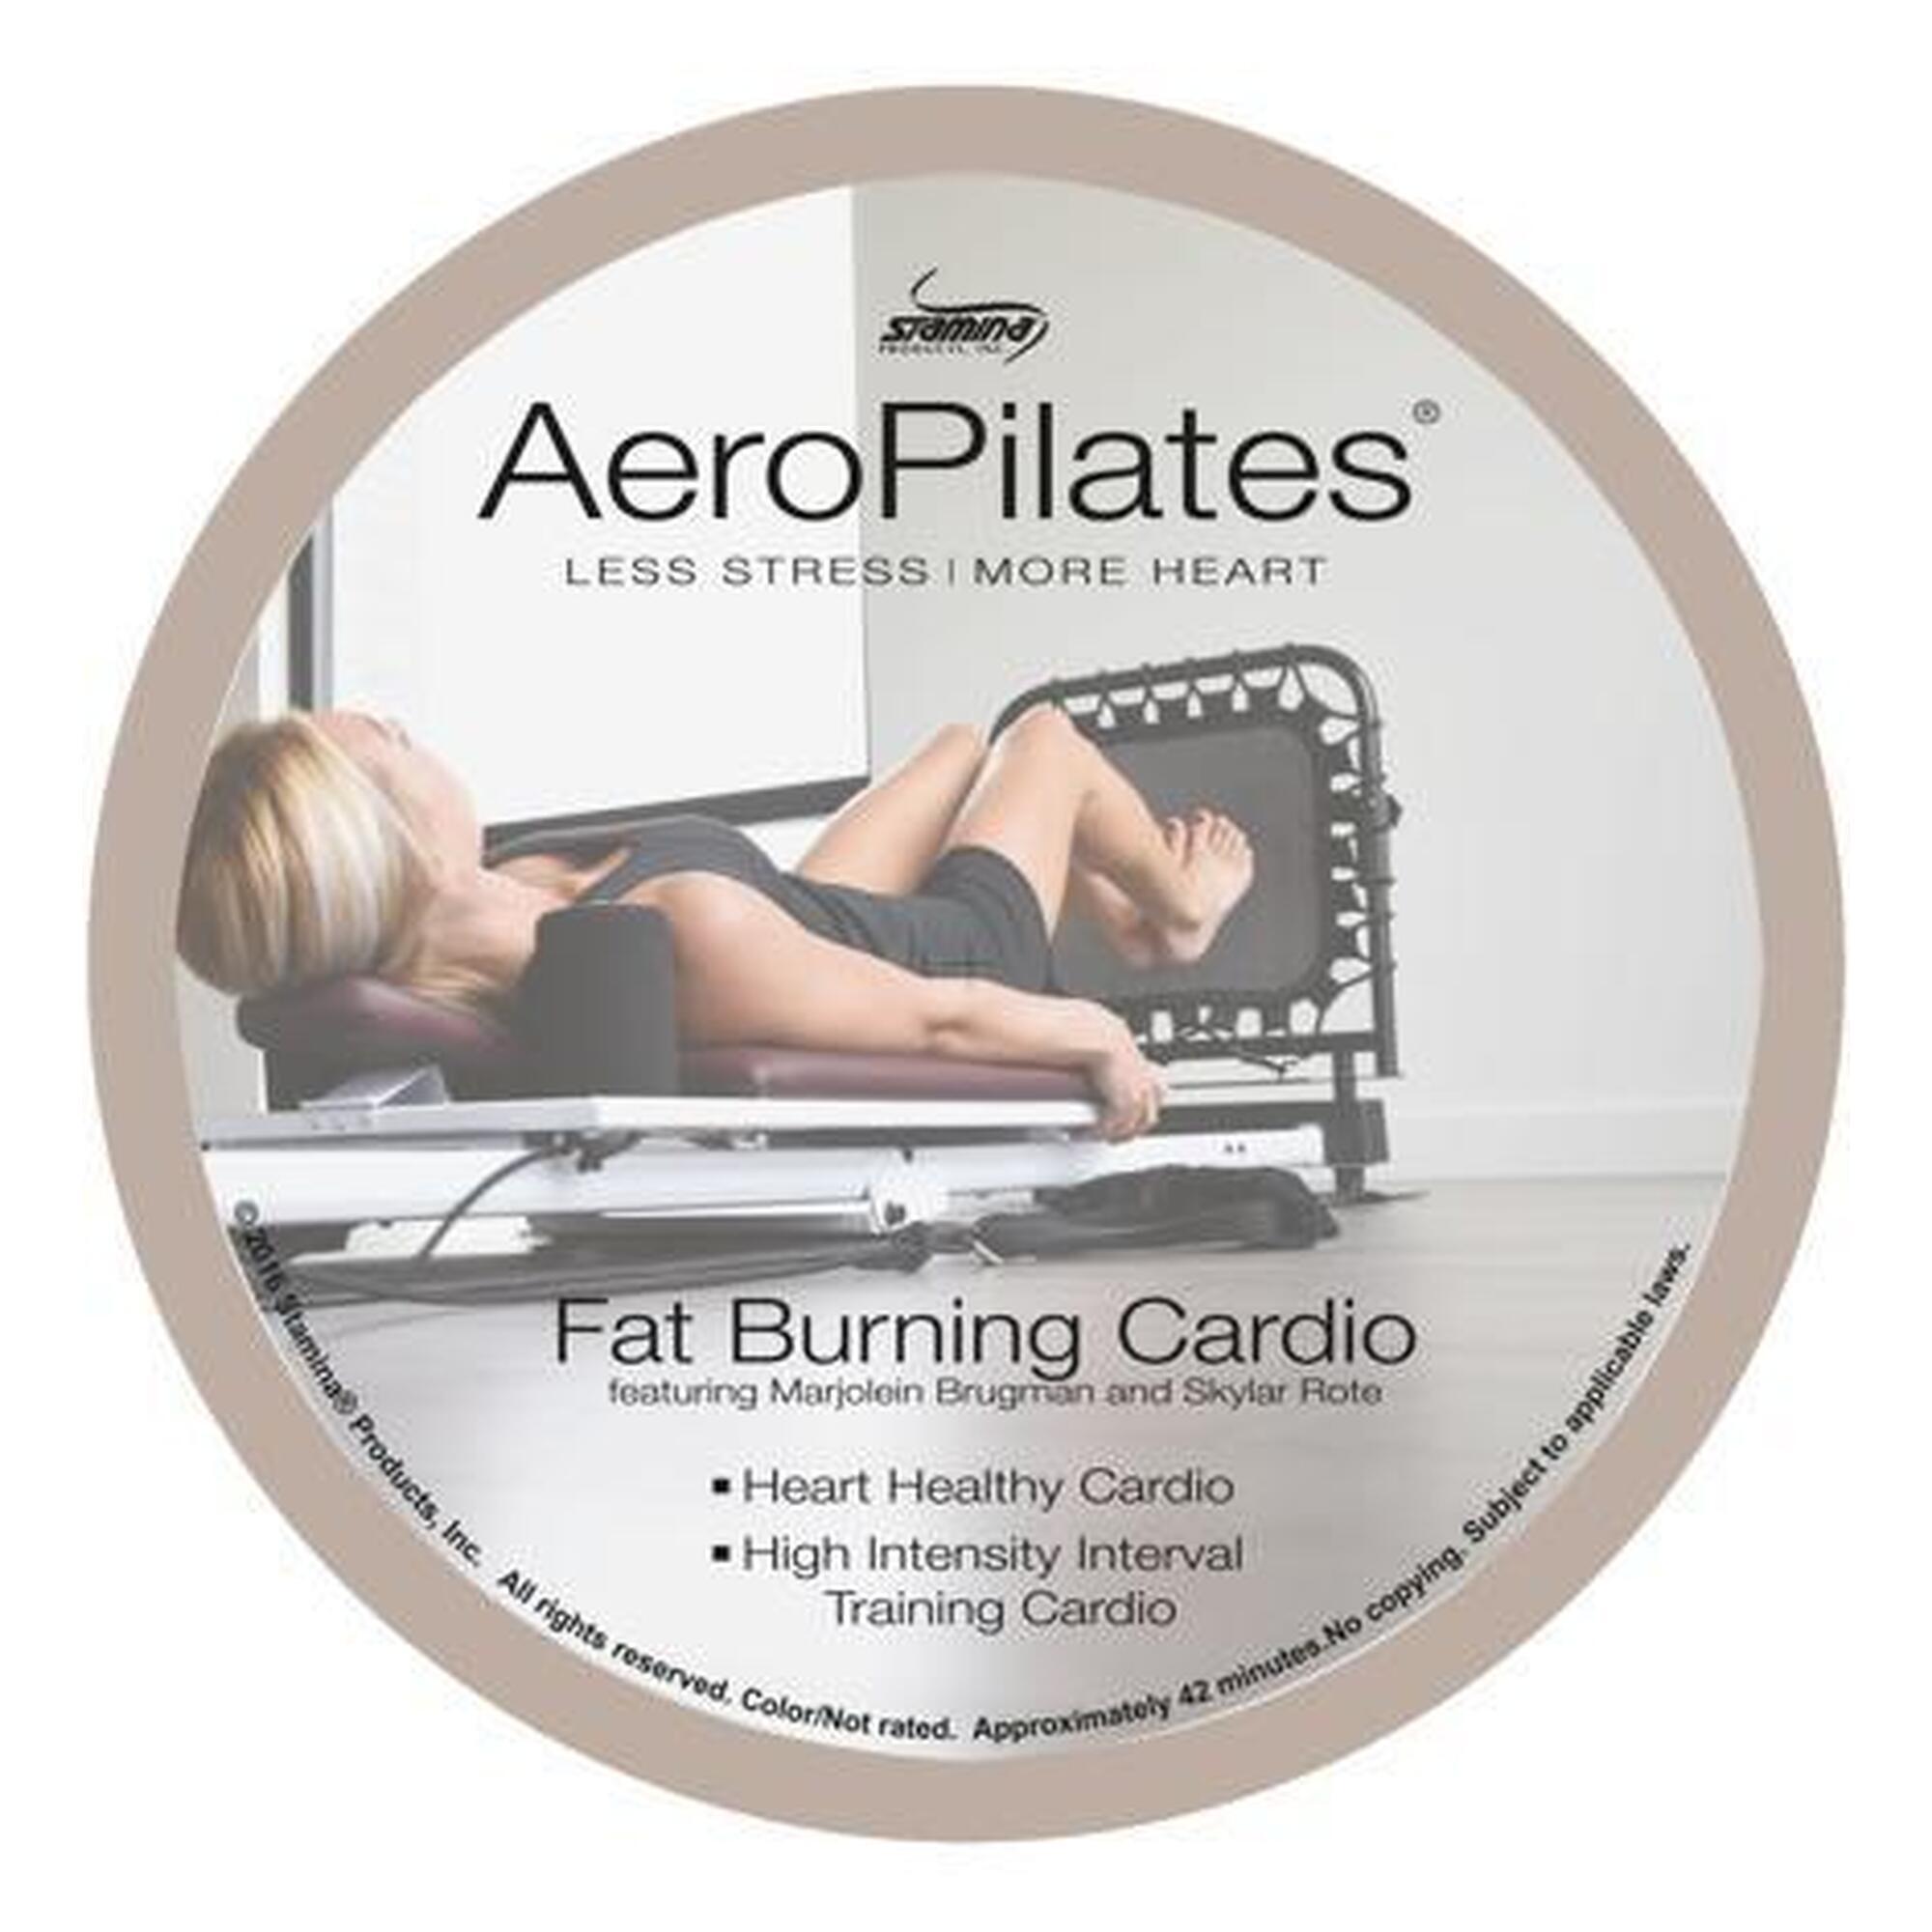 Aeropilates Pilates Fat Burning Cardio Workout DVD 1/1